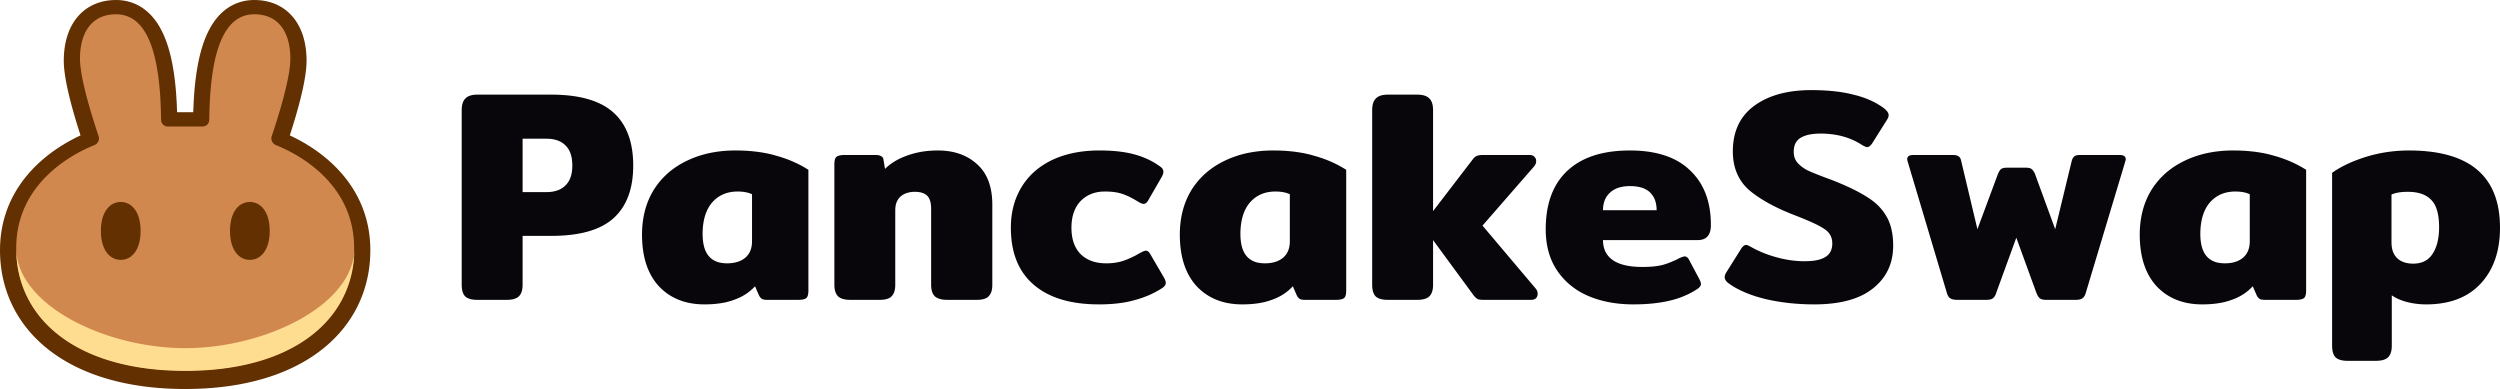 full-pancakeswap-logo